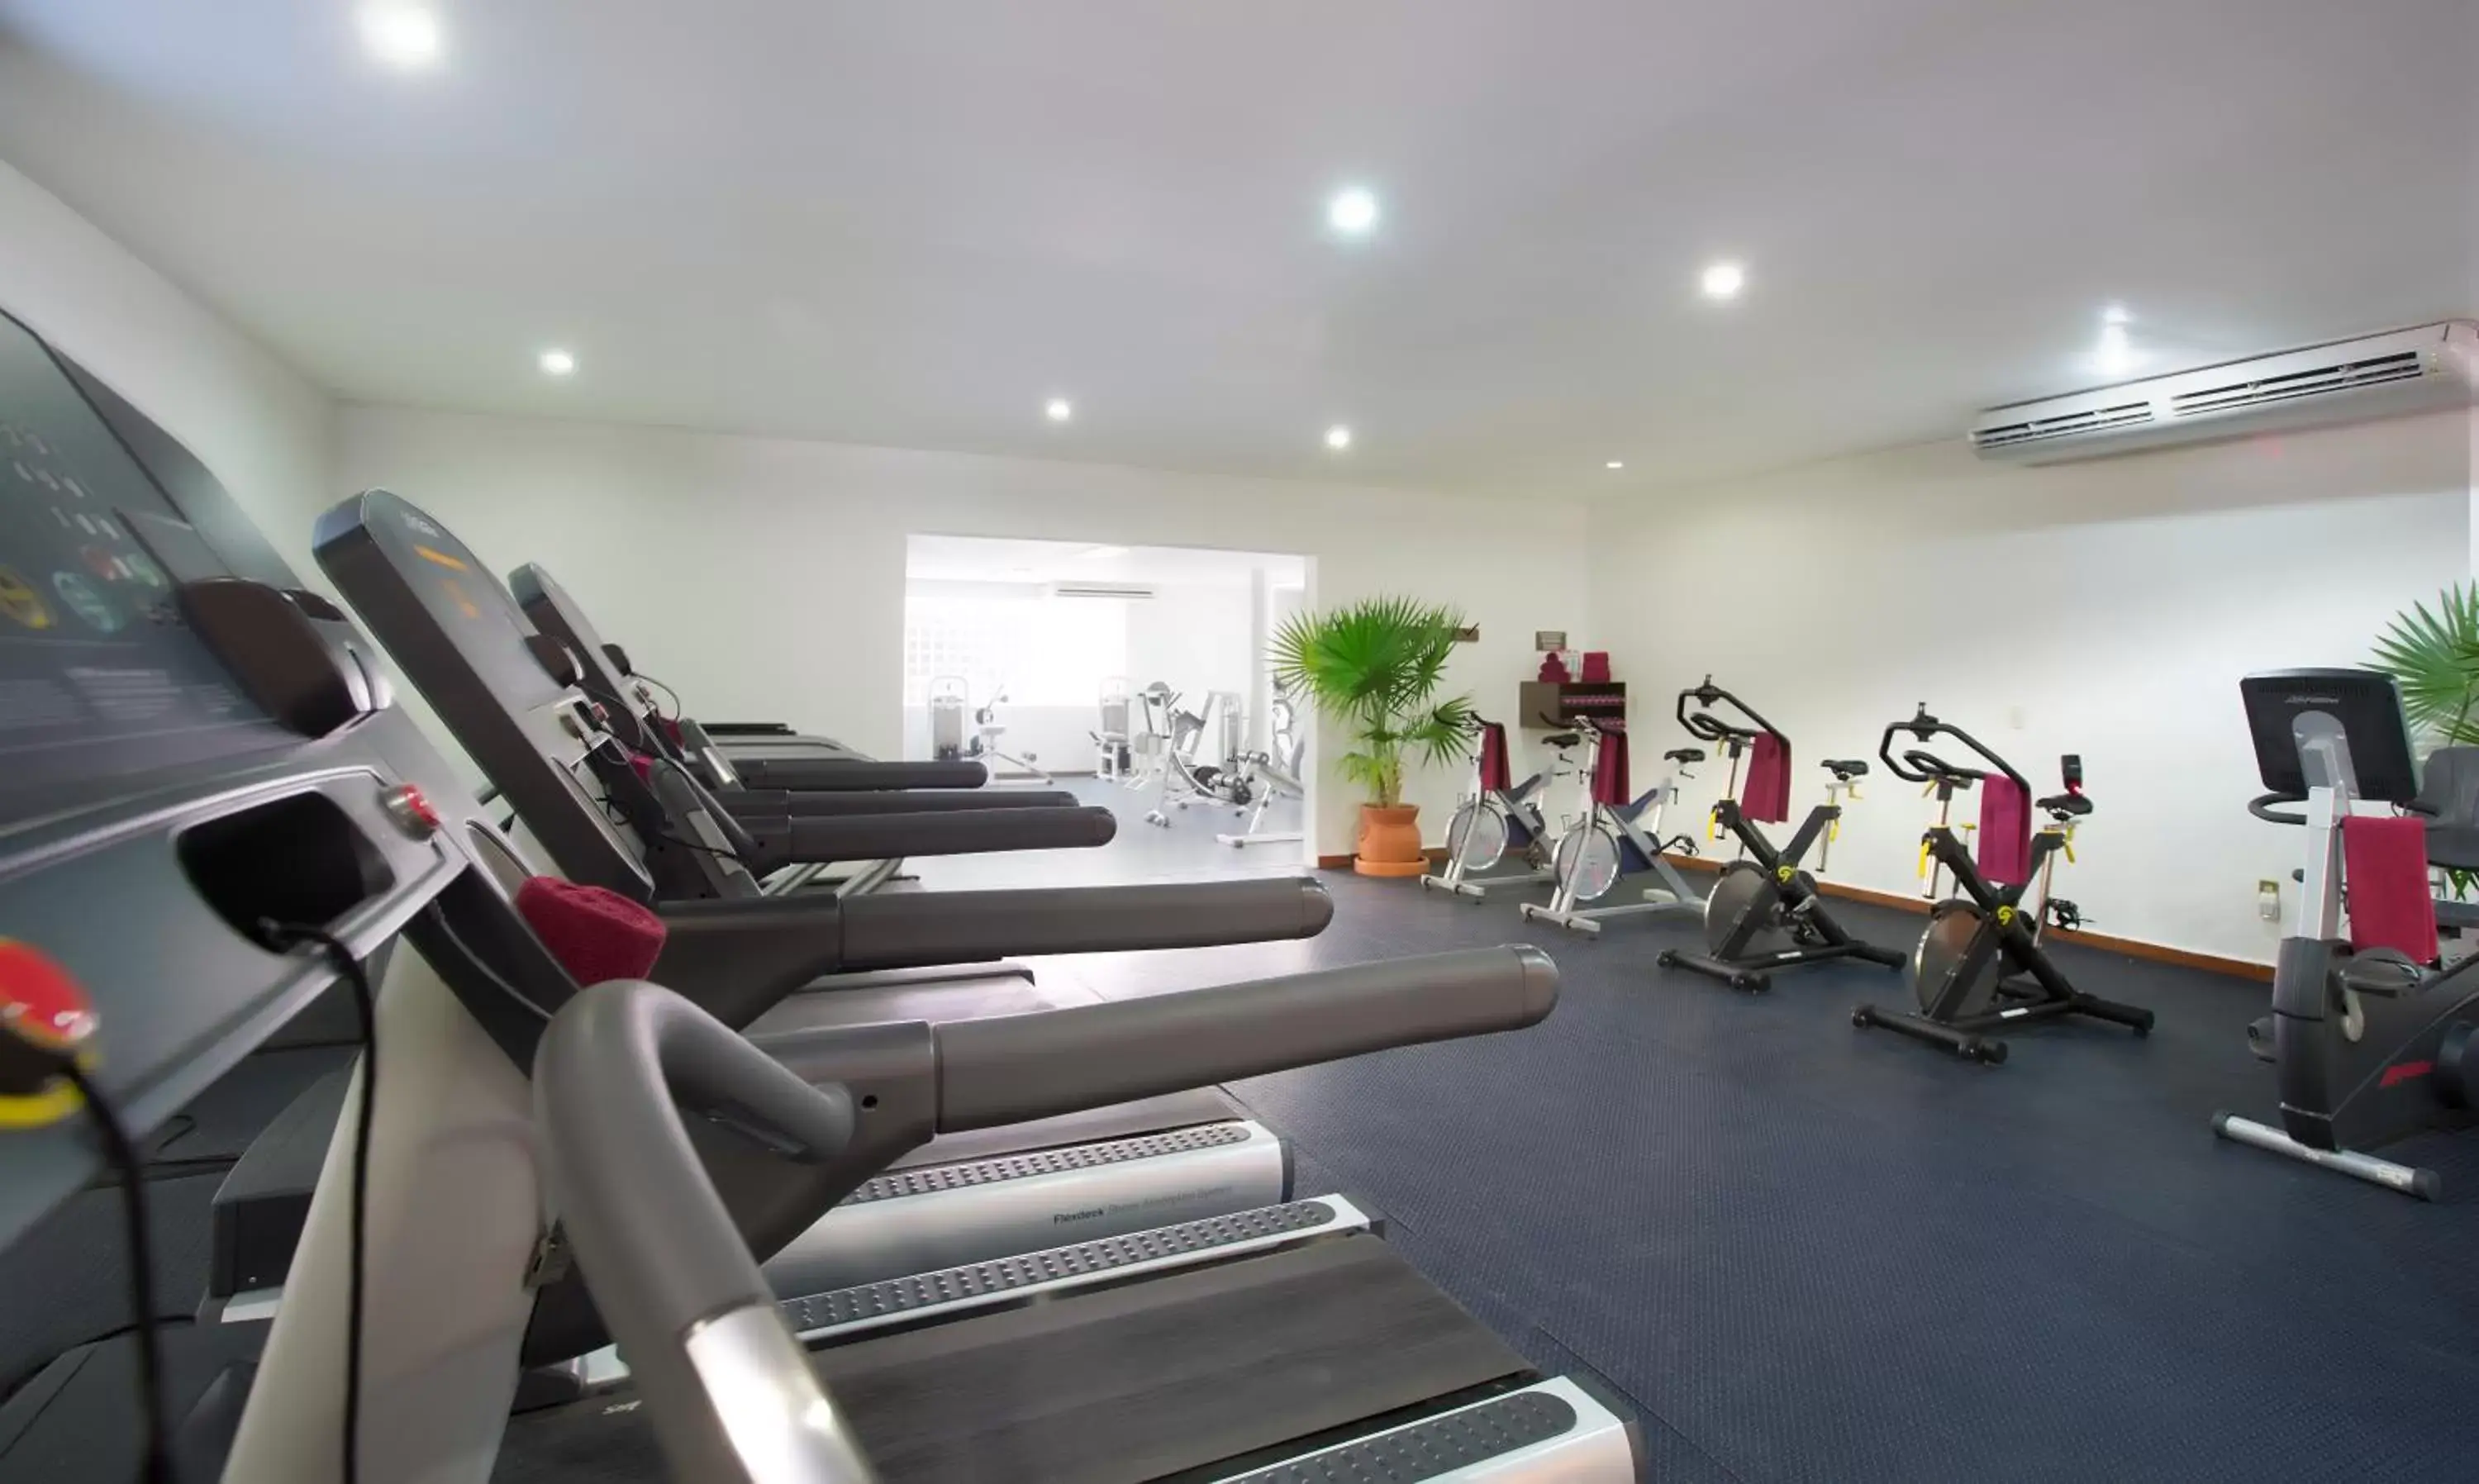 Fitness centre/facilities, Fitness Center/Facilities in Barceló Ixtapa - All Inclusive